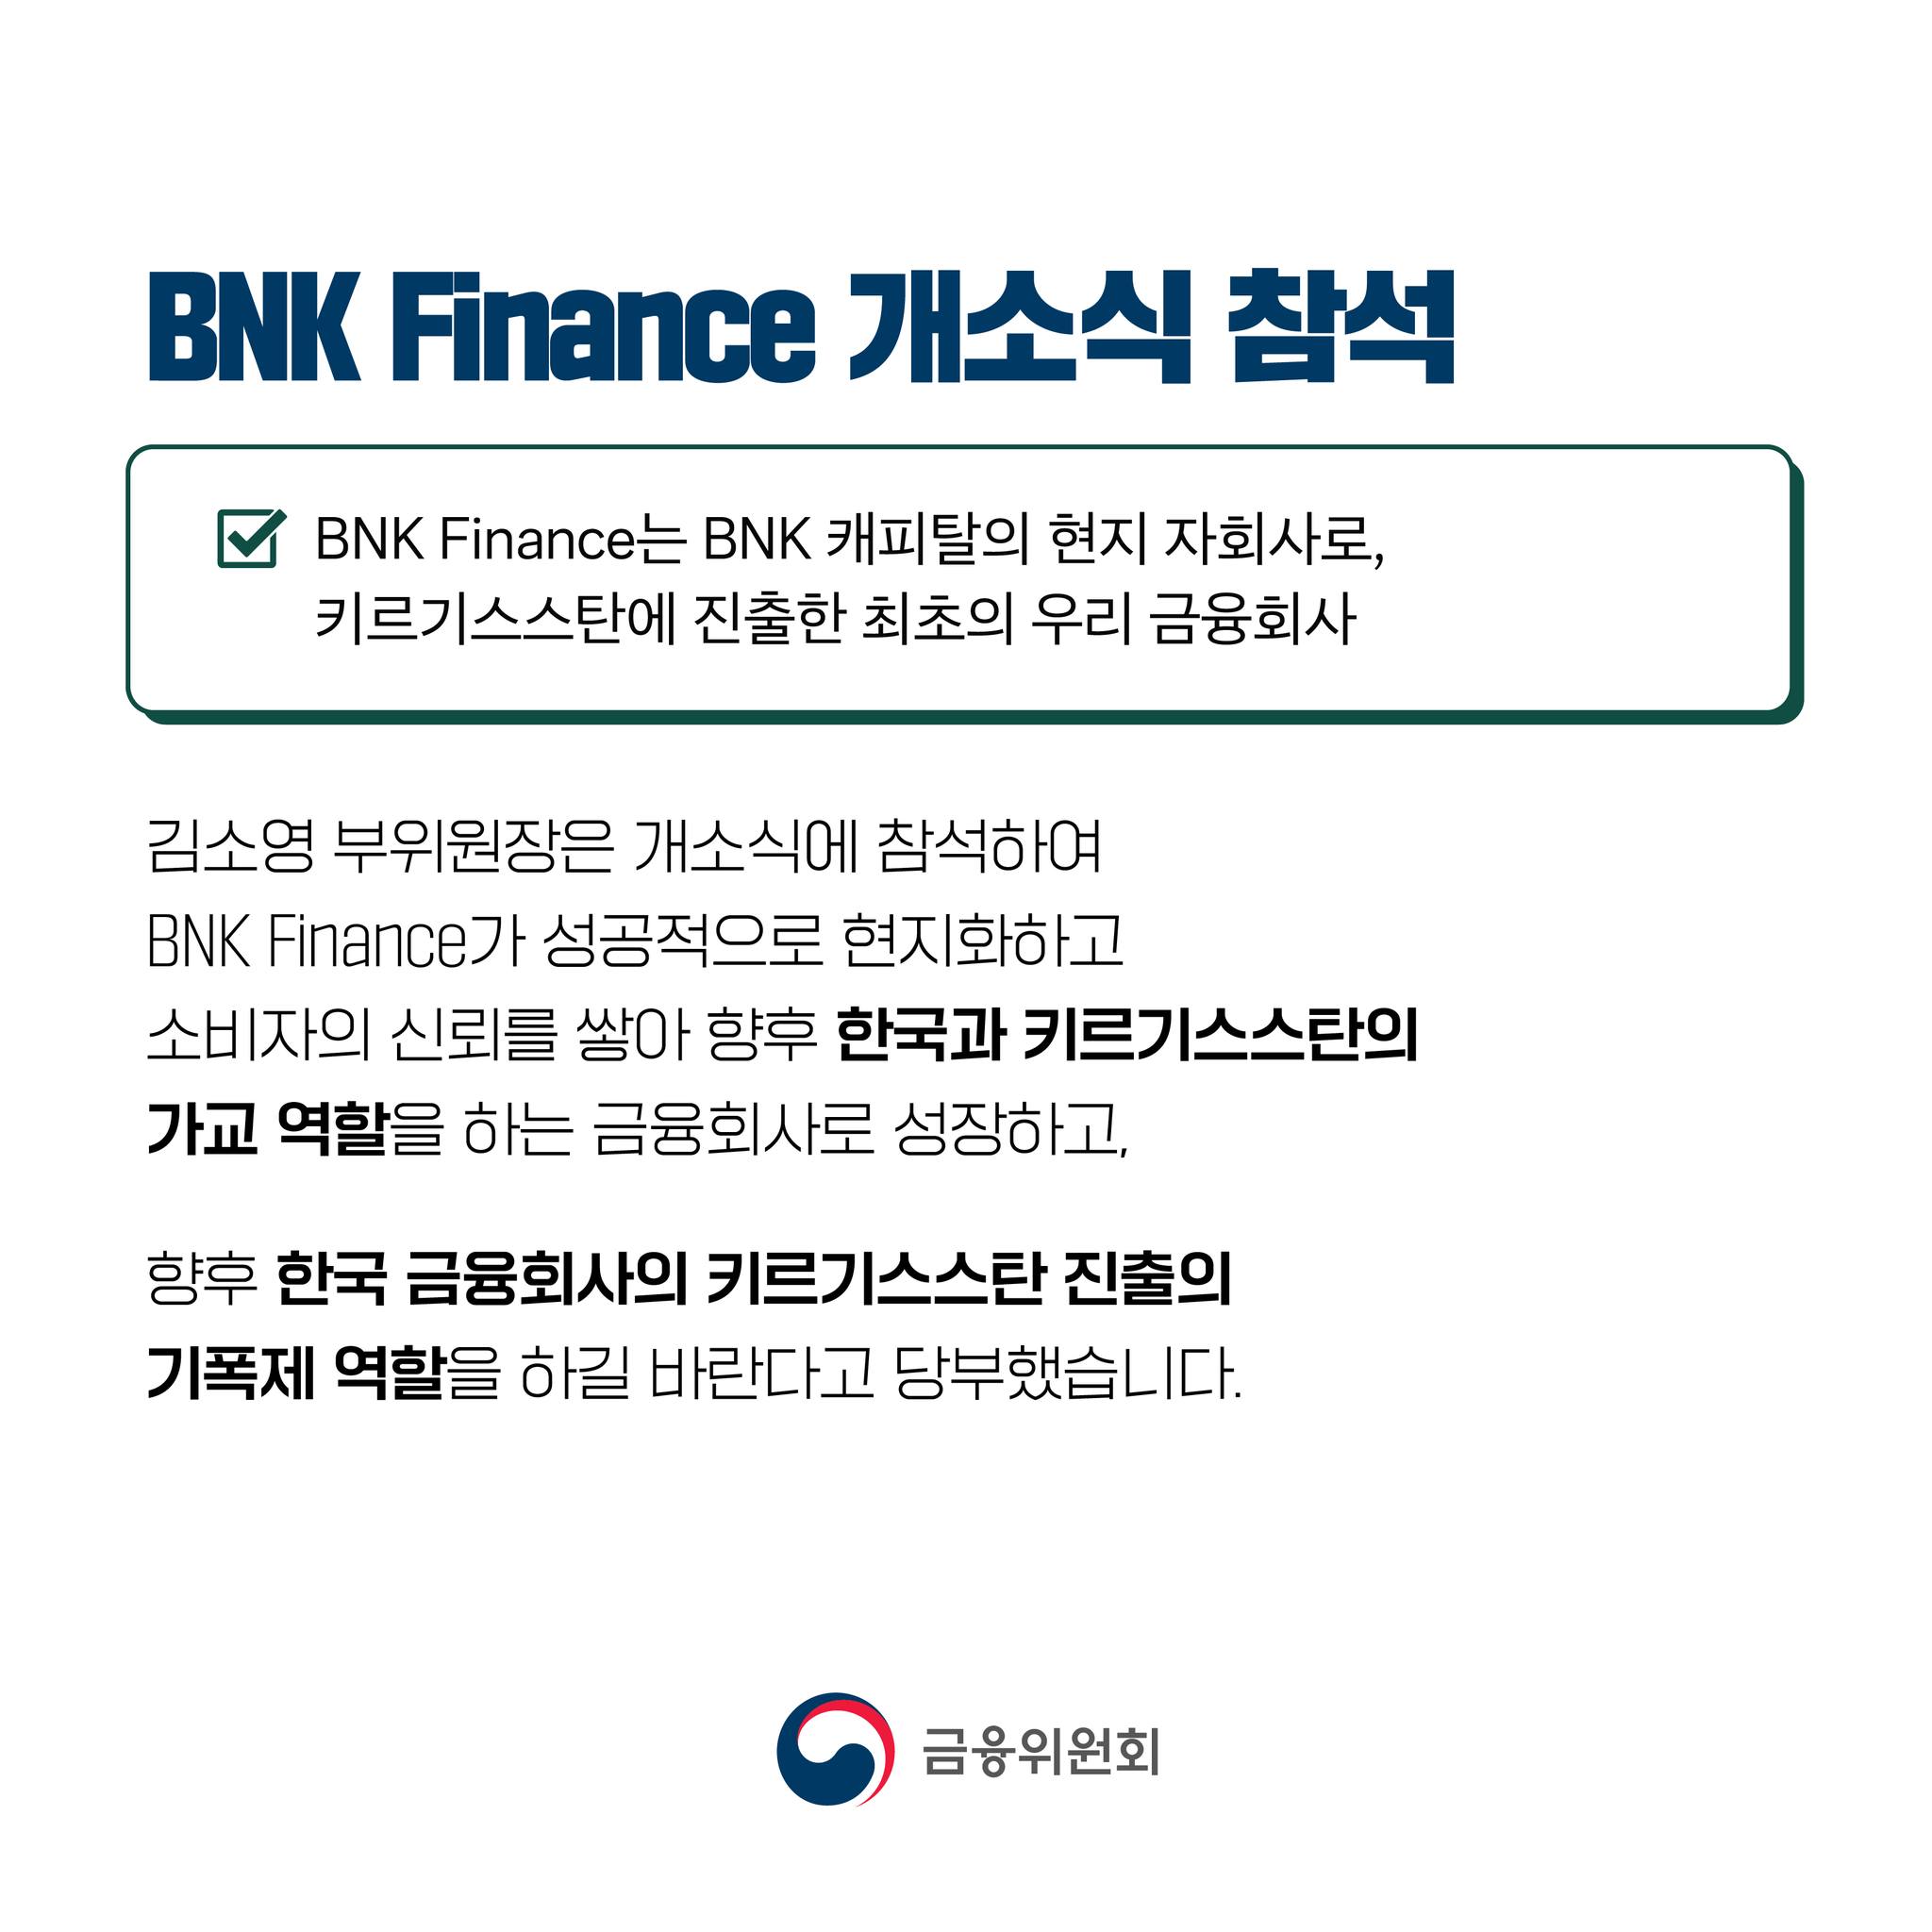 BNK Finance 개소식 참석. BNK Finance는 BNK 캐피탈의 현지 자회사로, 키르기스스탄에 진출한 최초의 우리 금융회사. 김소영 부위원장은 개소식에 참석하여 BNK Finance가 성공적으로 현지화하고 소비자의 신뢰를 쌓아 향후 한국과 키르기스스탄의 가교 역할을 하는 금융회사로 성장하고, 향후 한국 금융회사의 키르기스스탄 진출의 기폭제 역할을 하길 바란다고 당부했습니다.